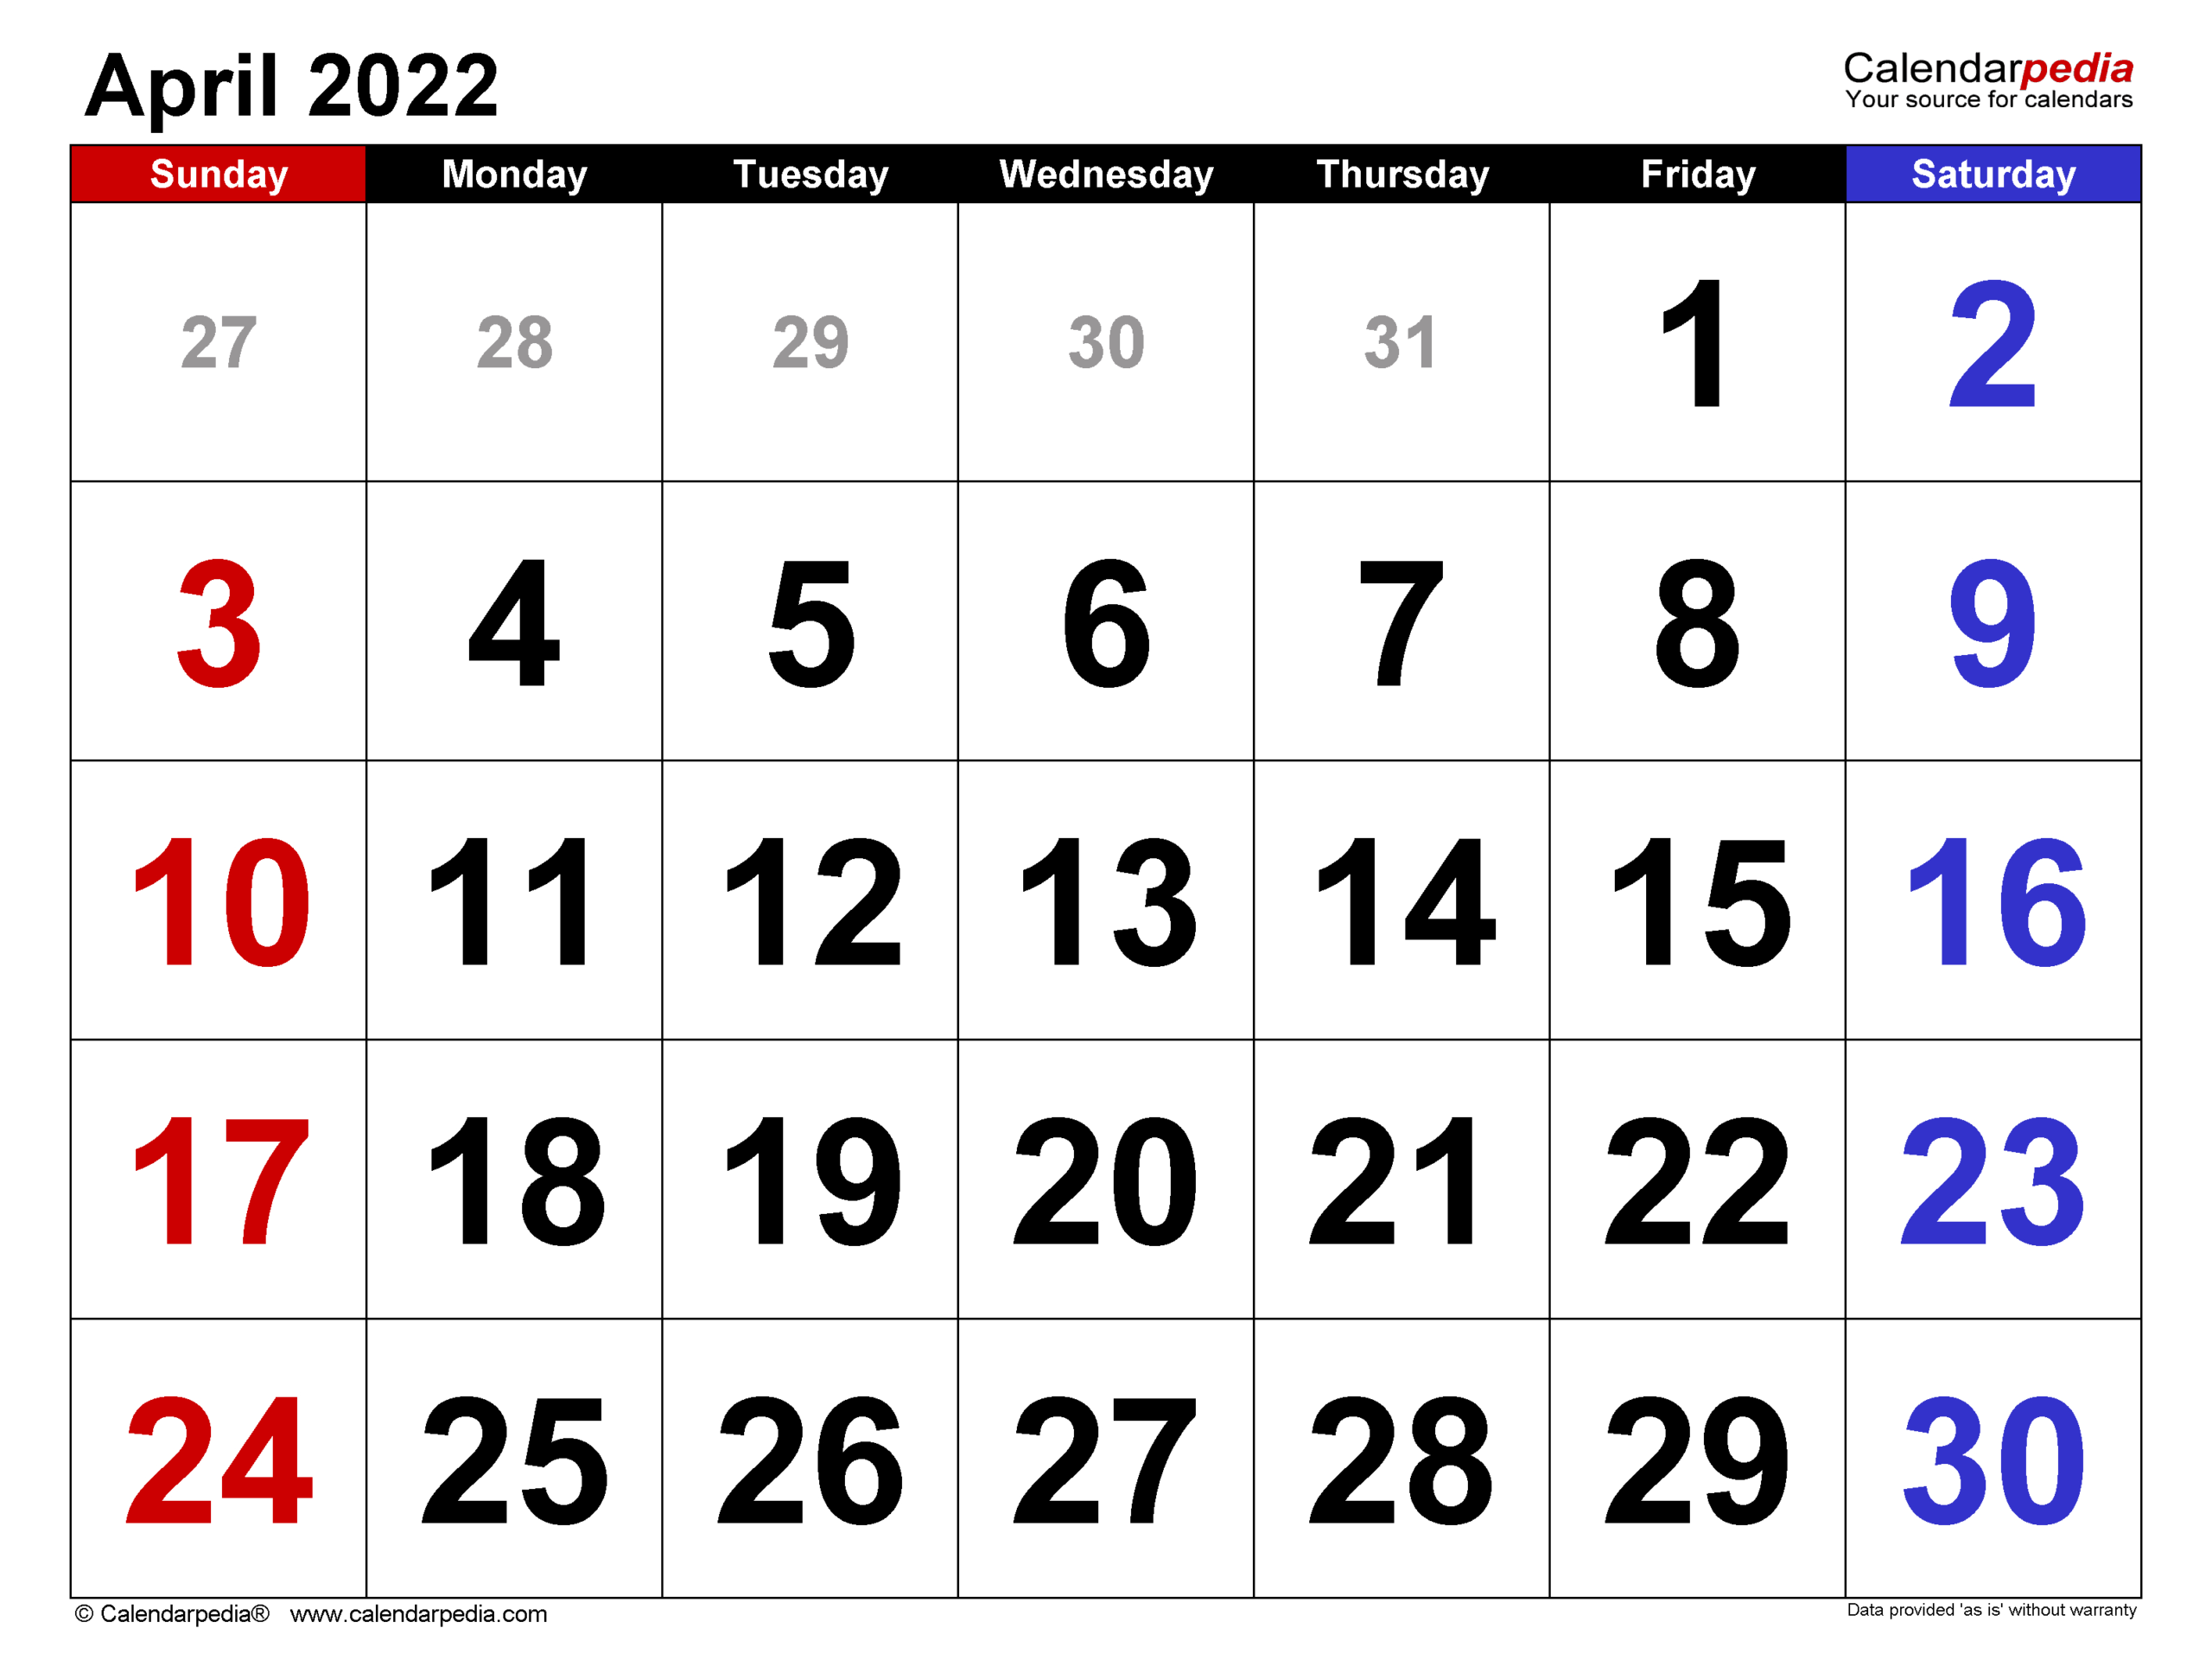 April 2022 Calendar Manorama - Latest News Update